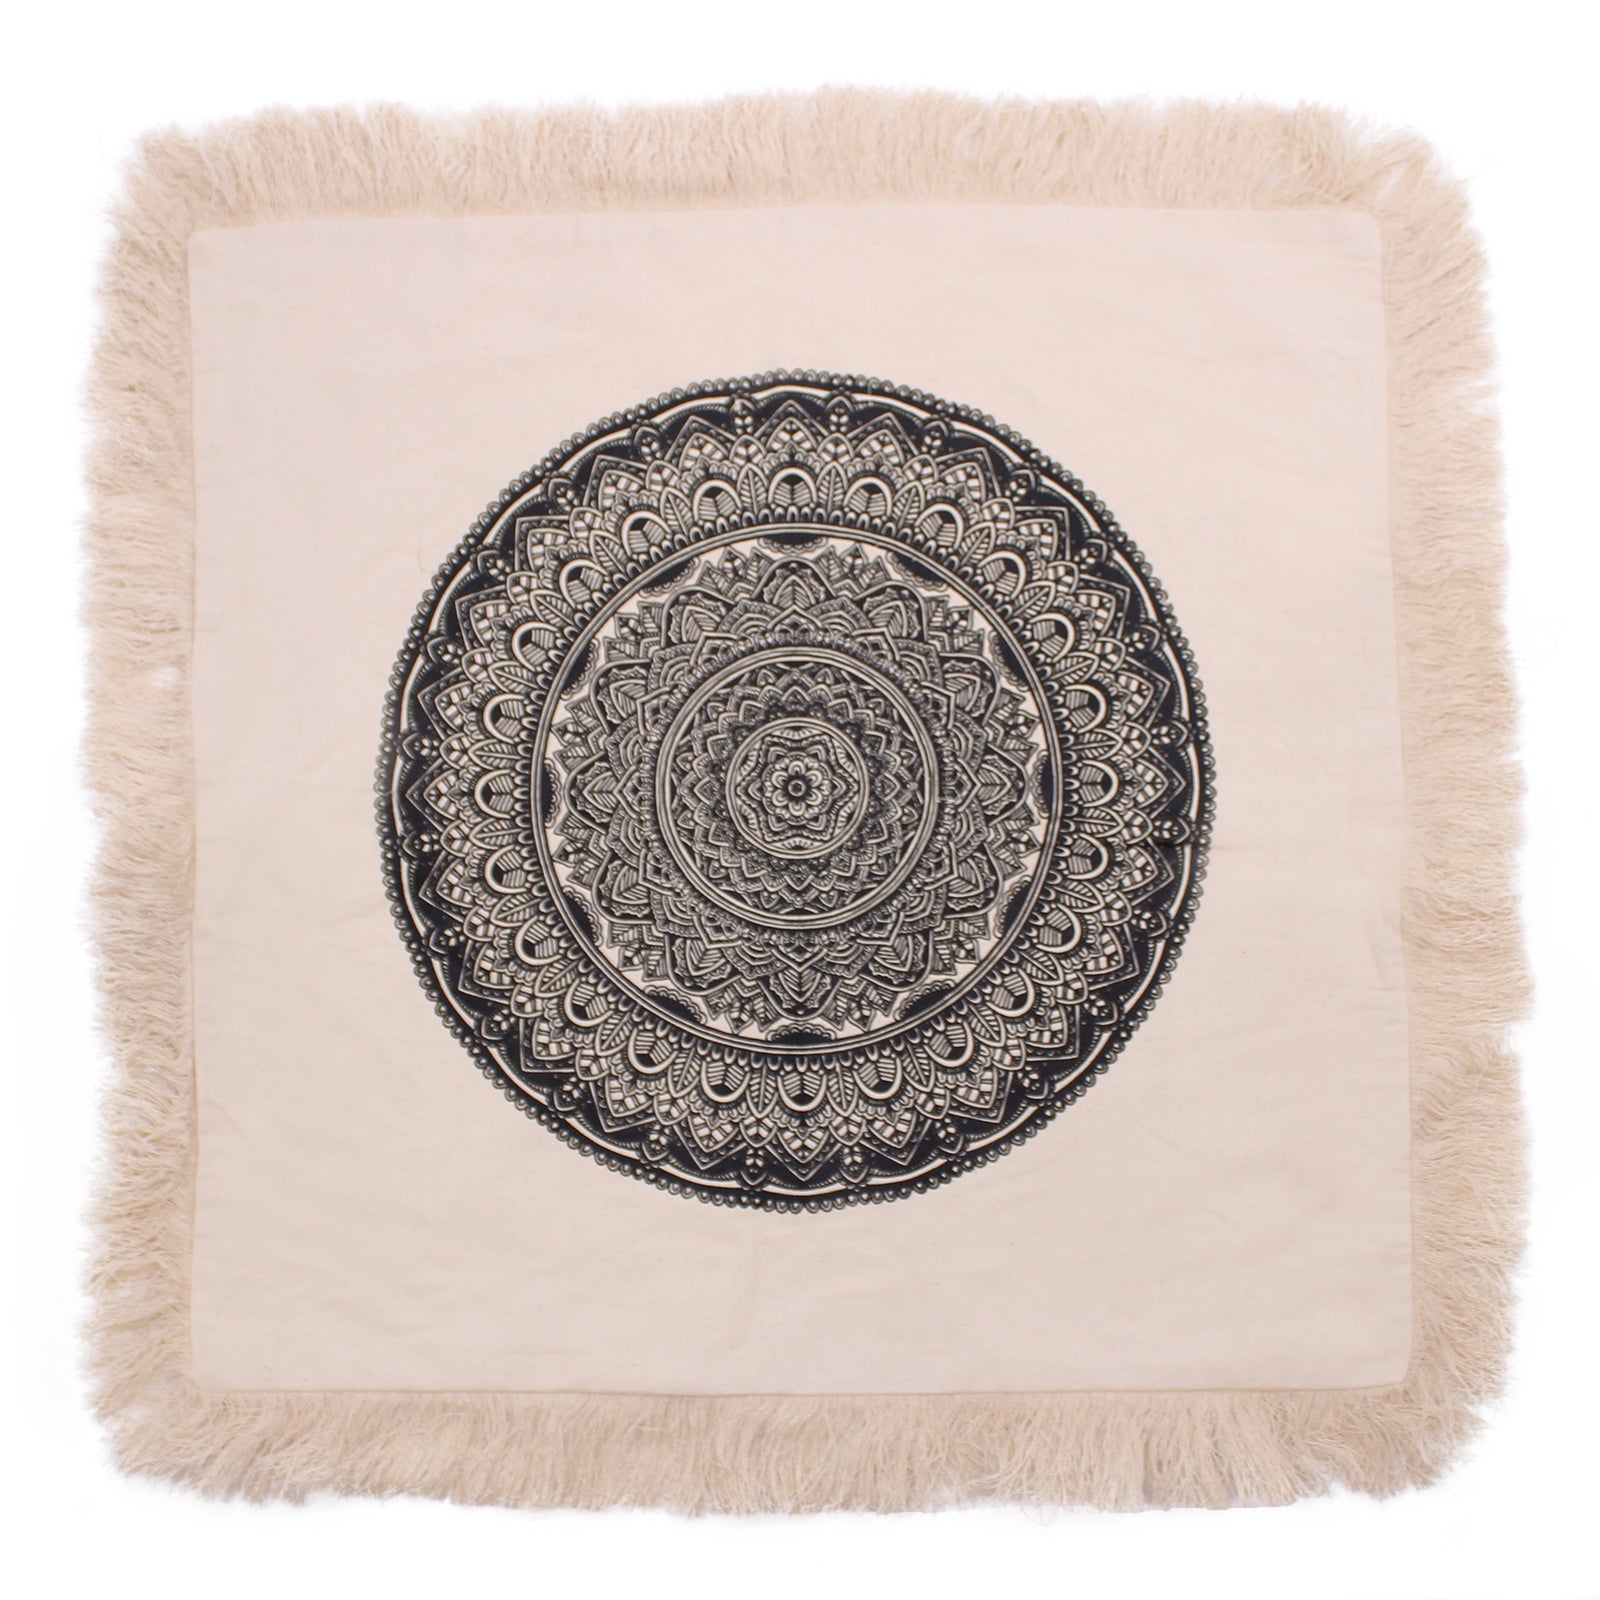 View Traditional Mandala Cushion 60x60cm black information